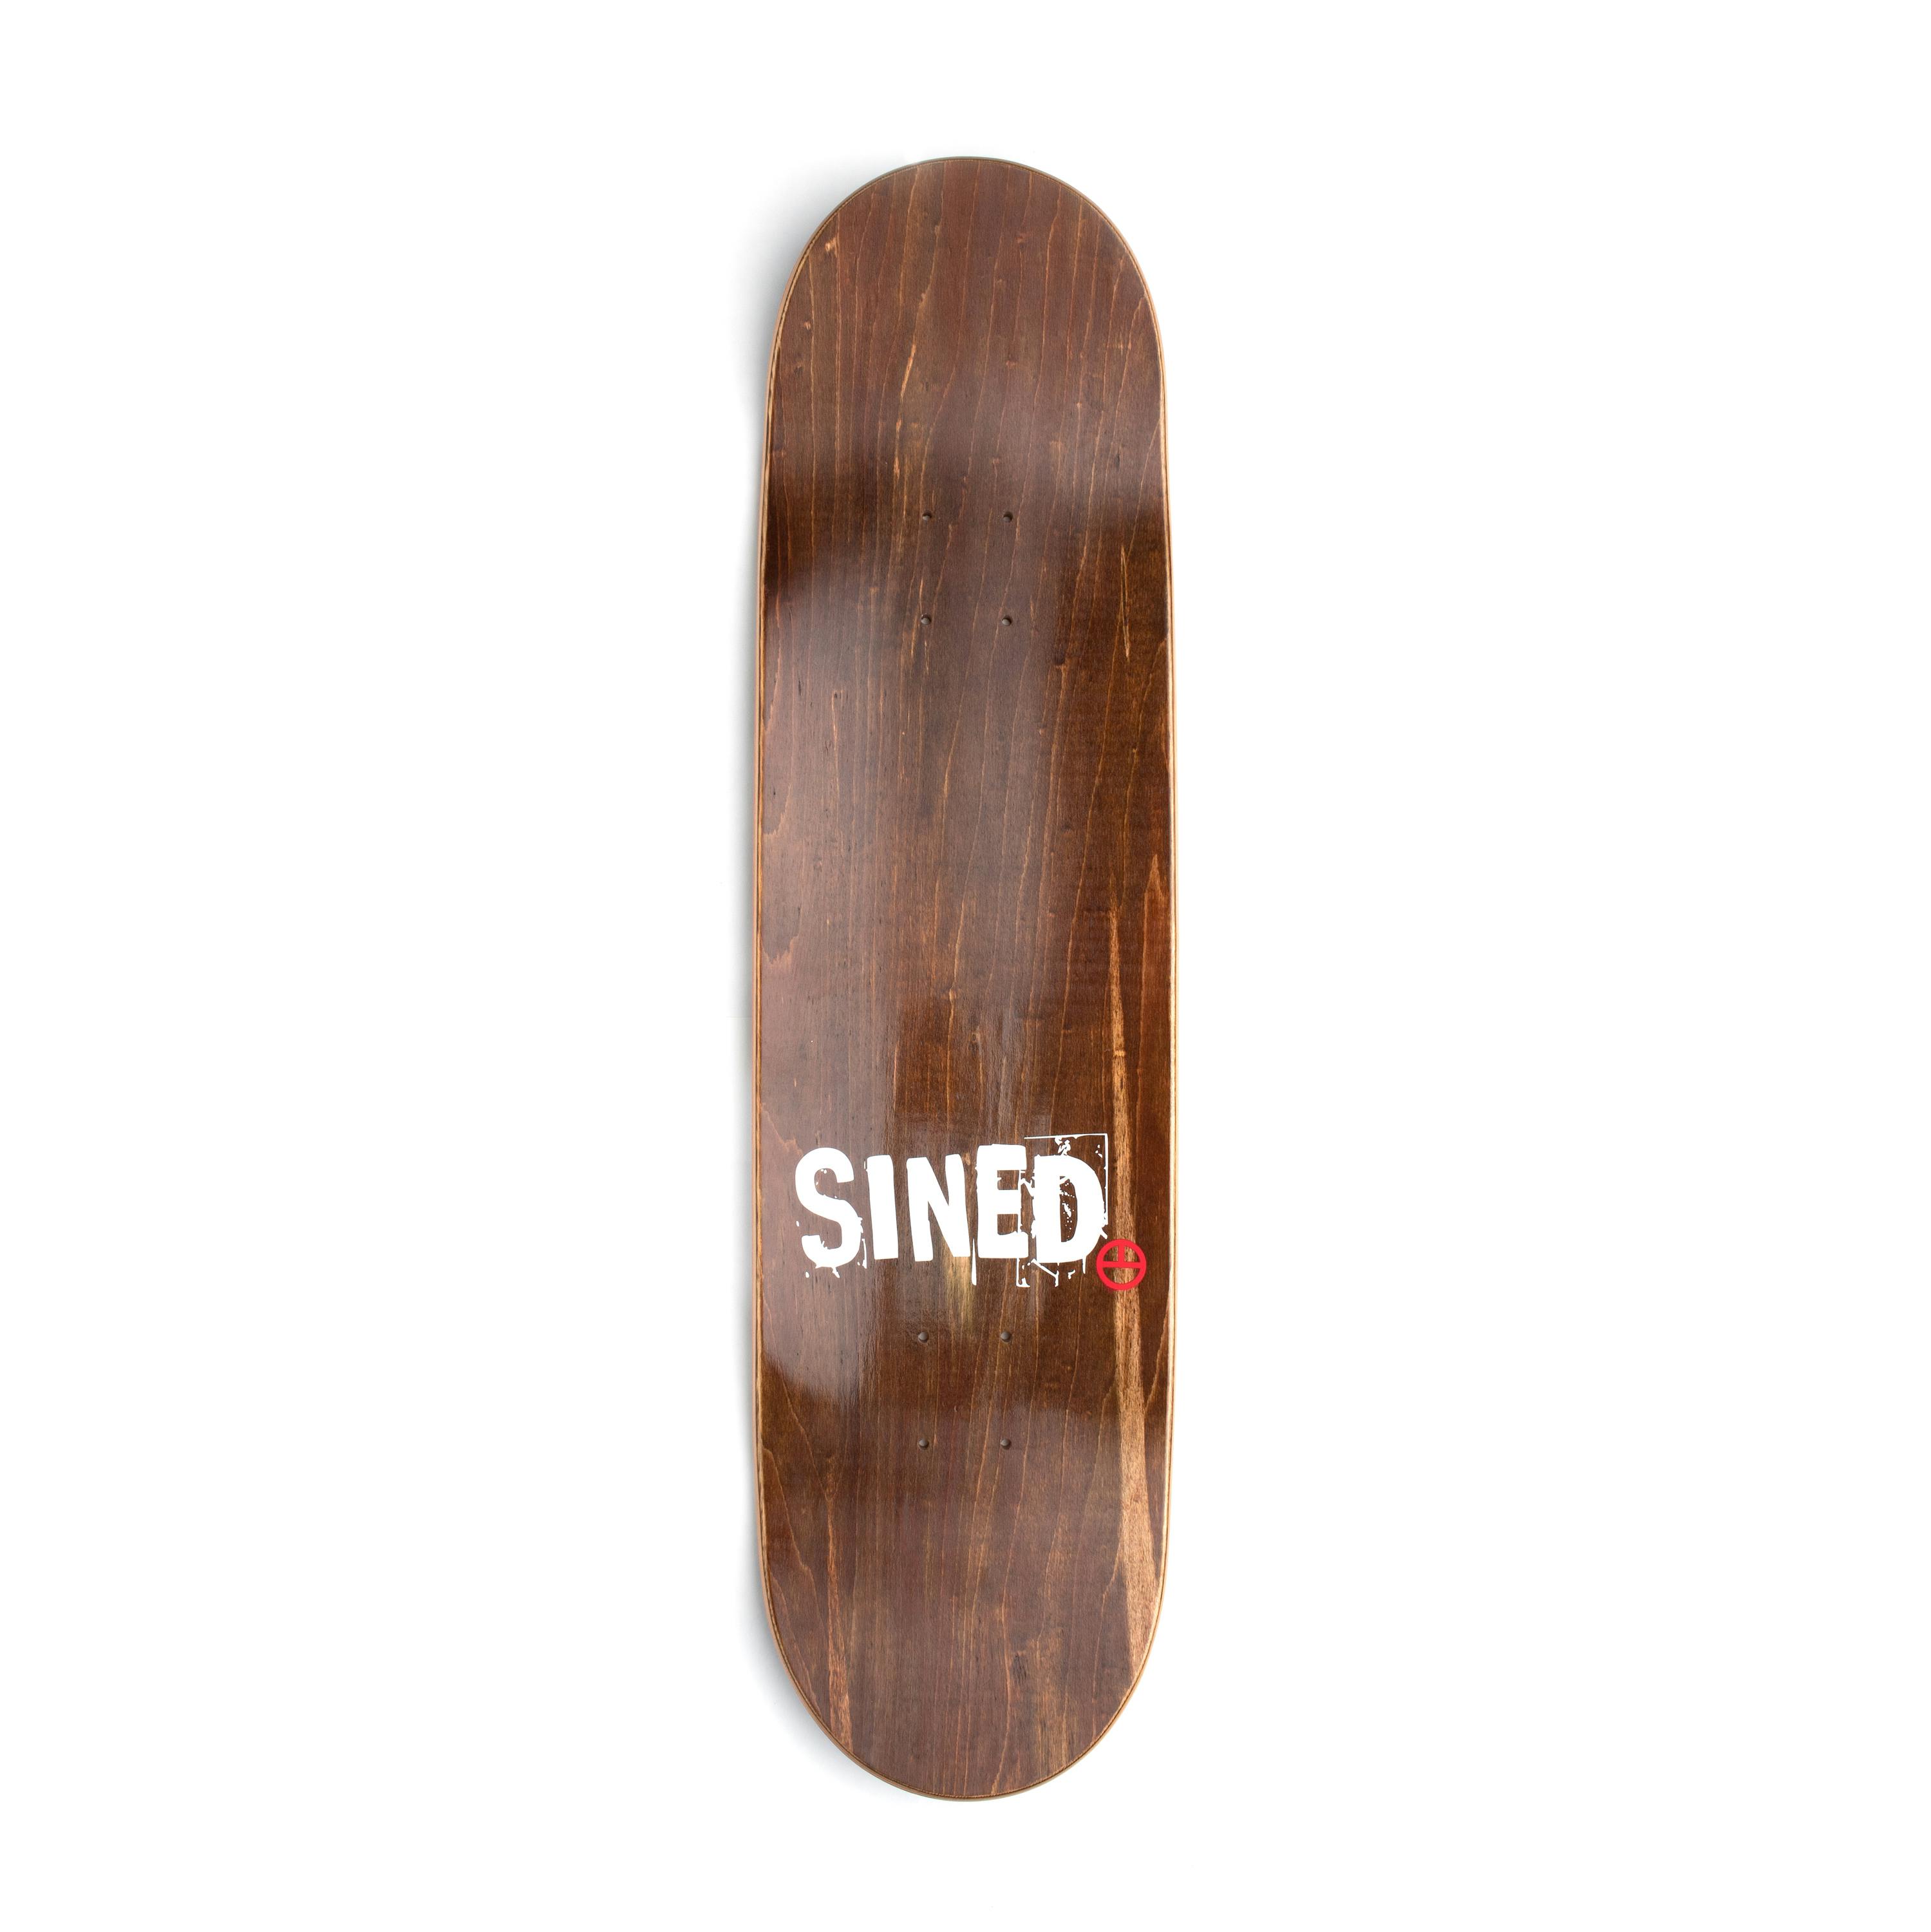 Sined Skateboards